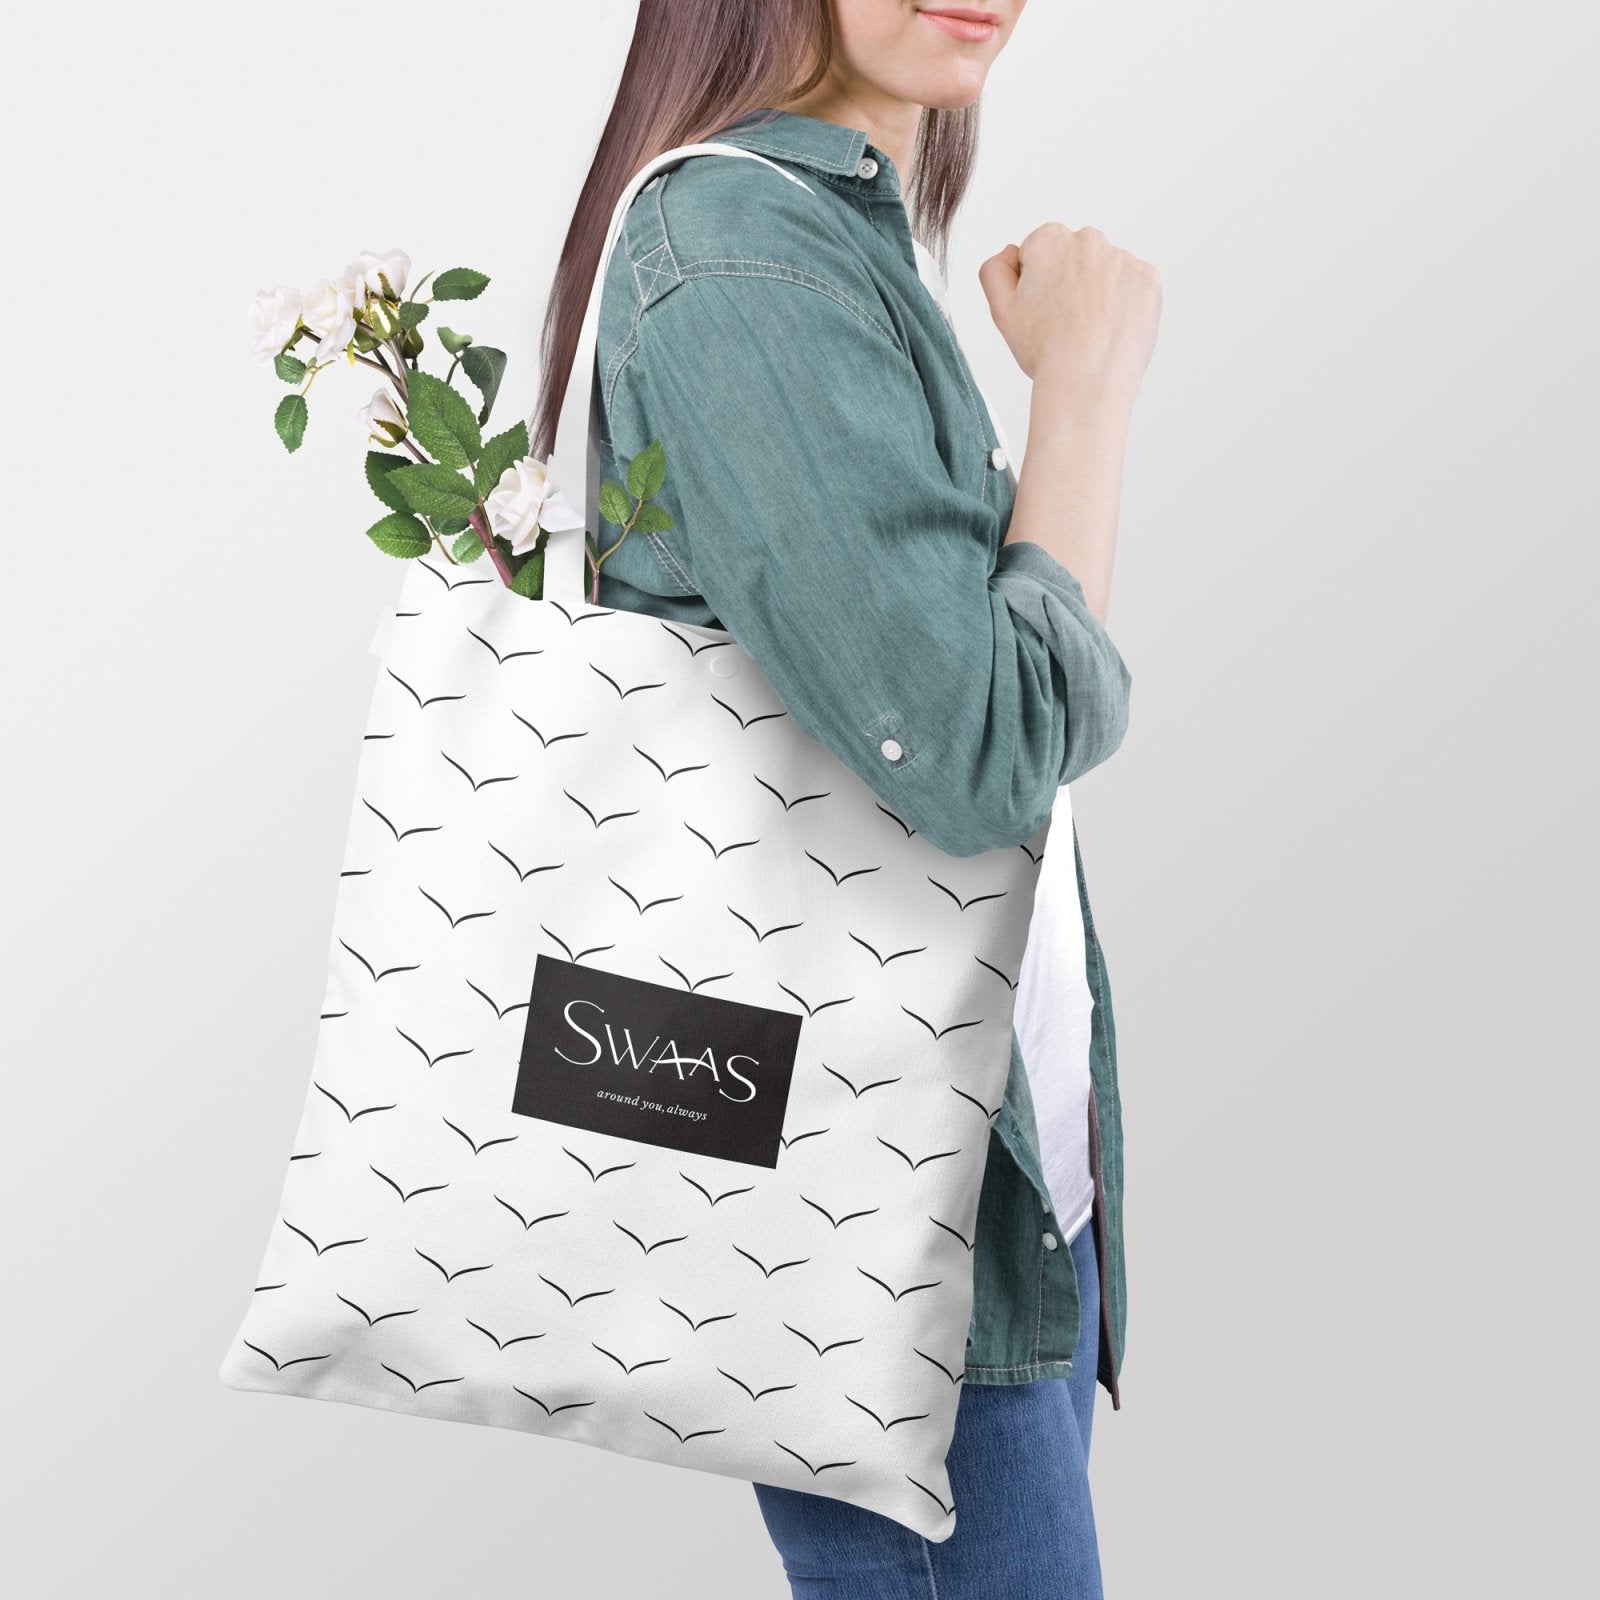 Swaas 100% Cotton Splash-Proof White/Black Tote Bag for Women - hfnl!fe